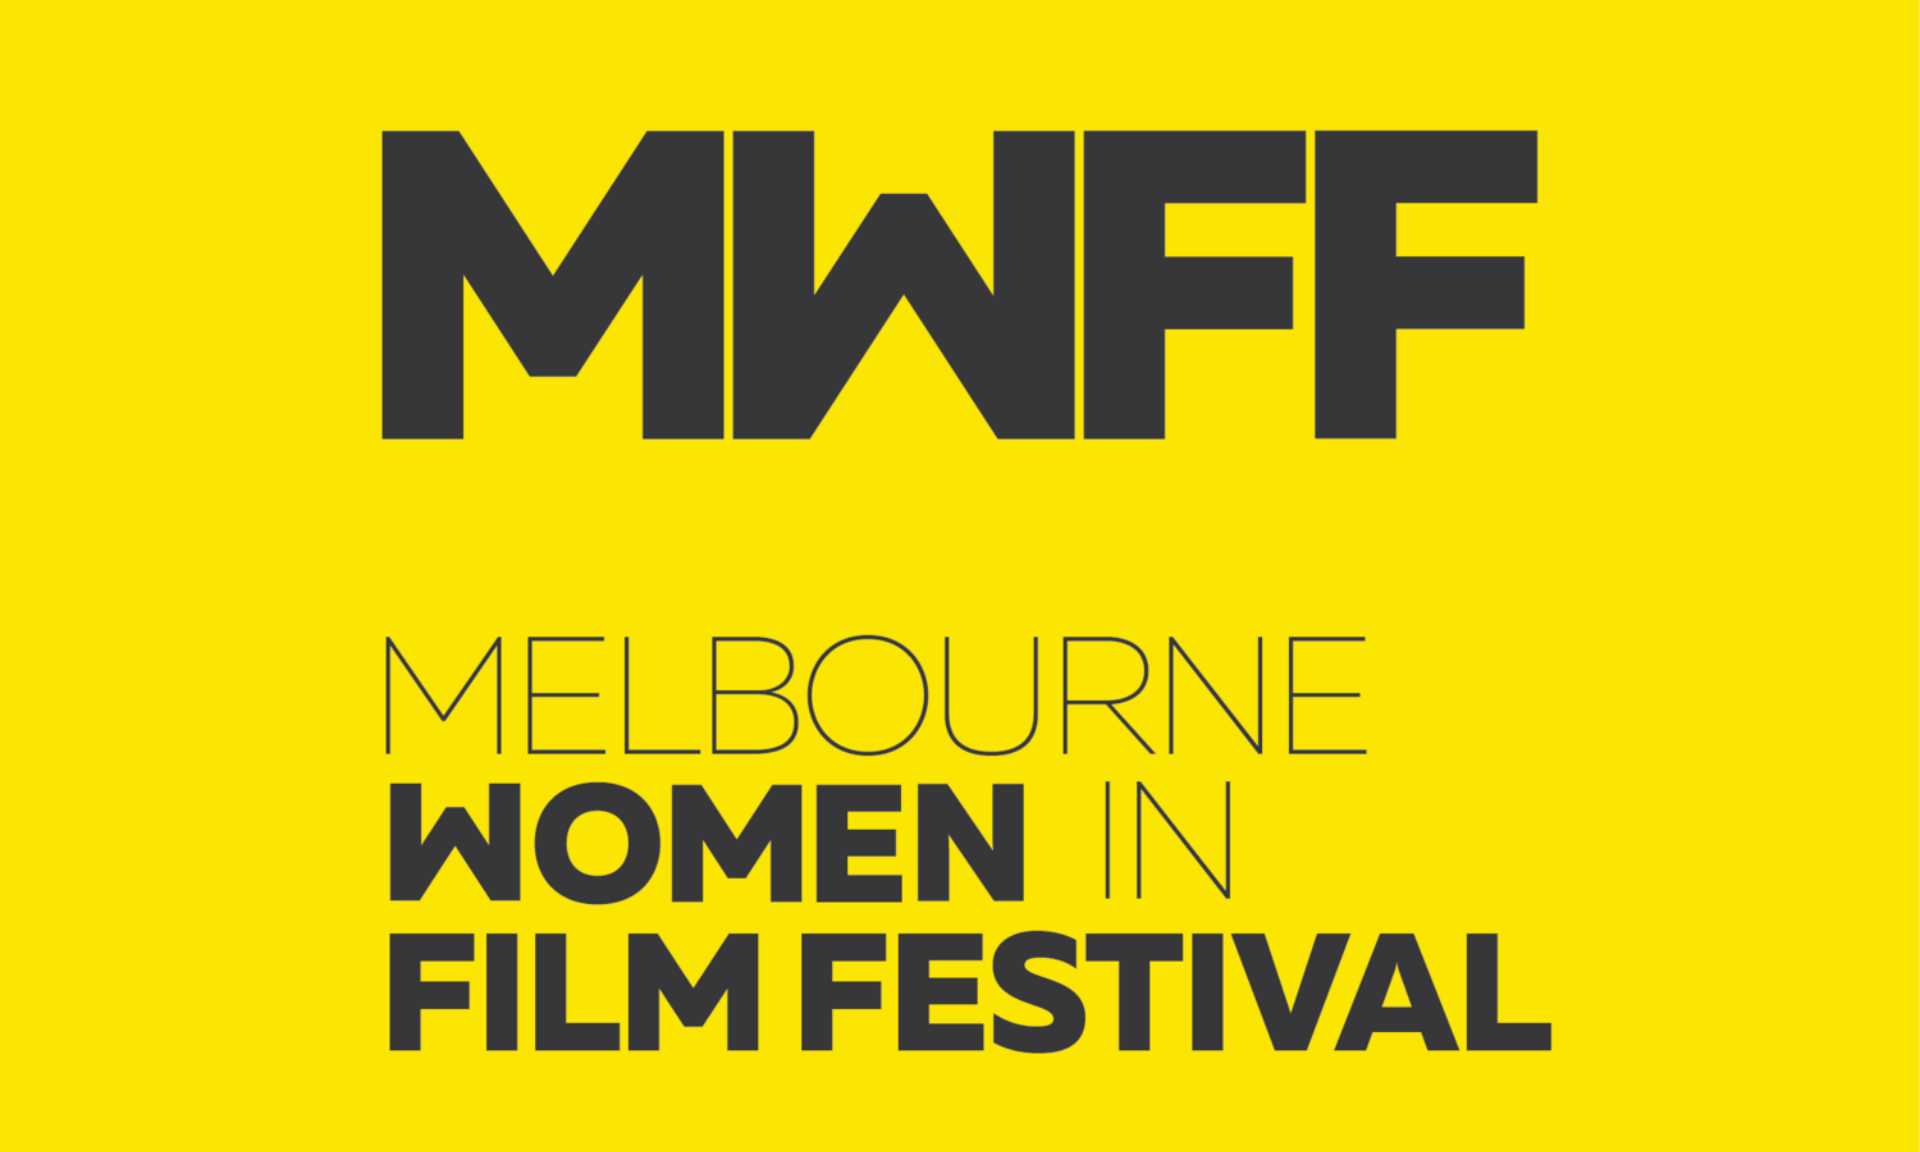 Melbourne Women in Film Festival (MWFF)